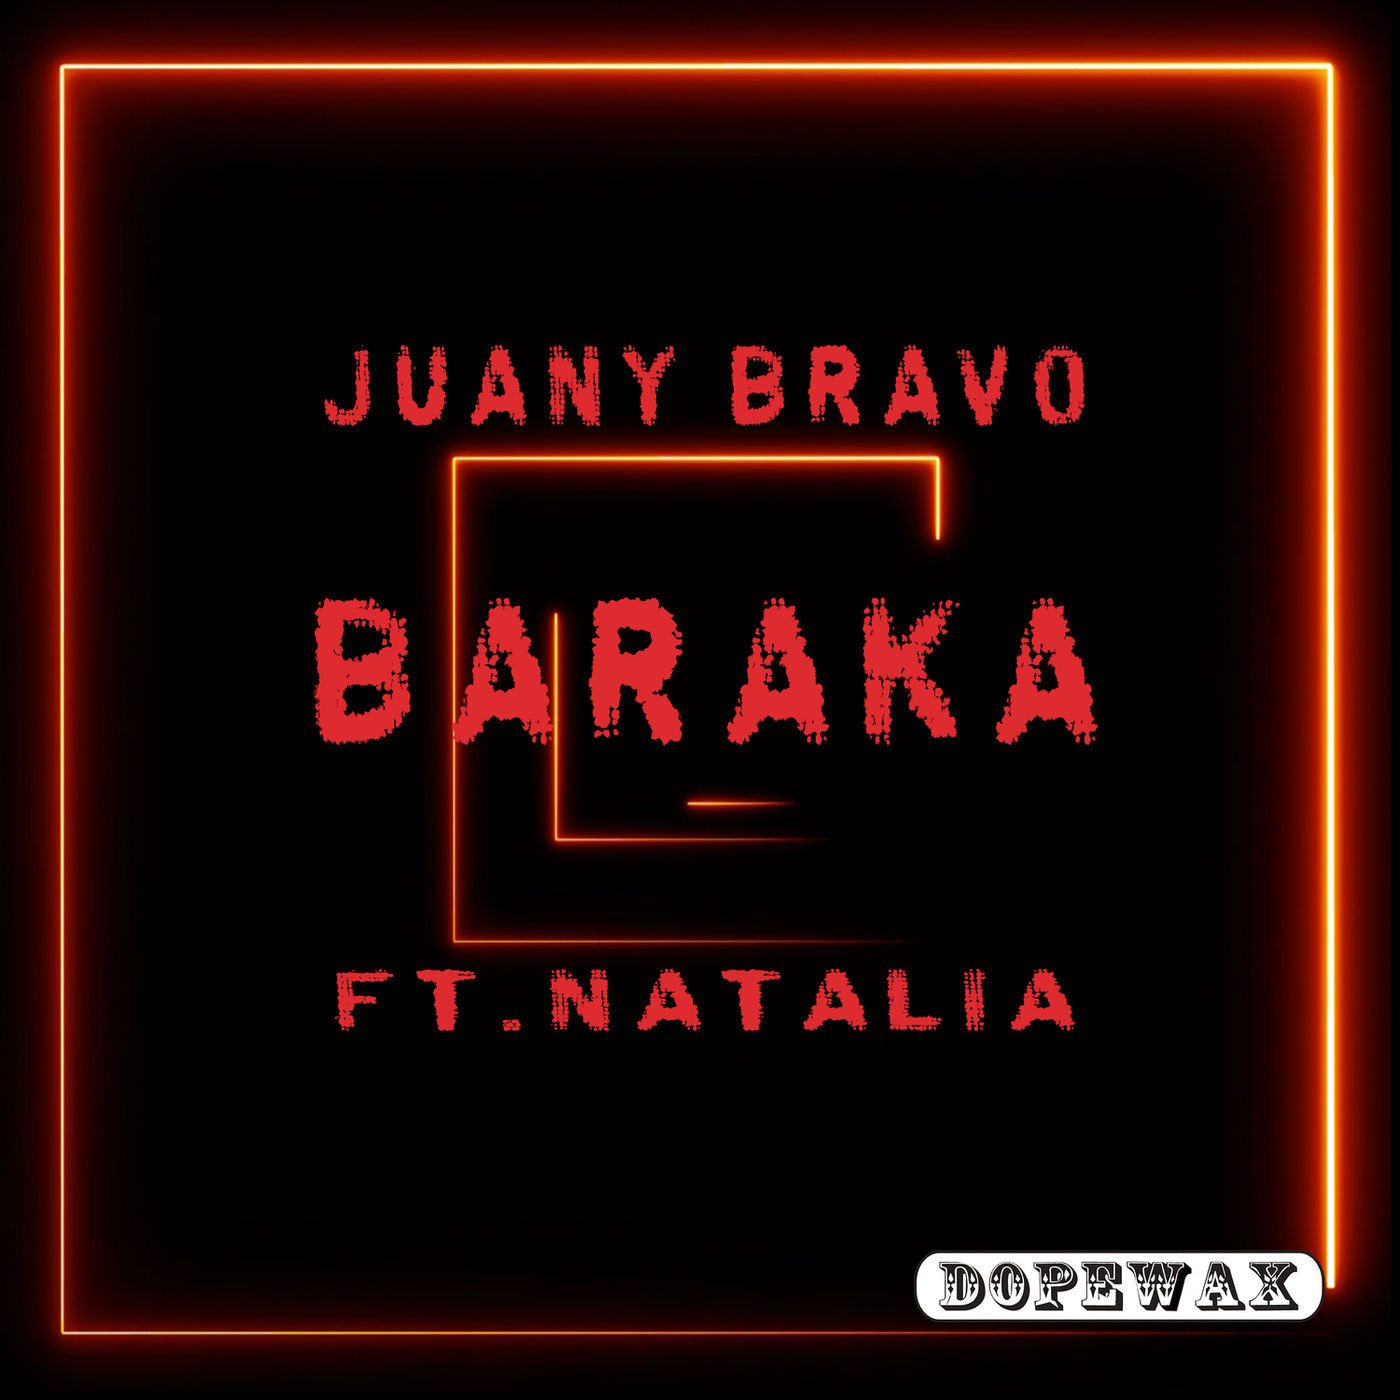 Juany Bravo ft Natalia - Baraka / Dopewax